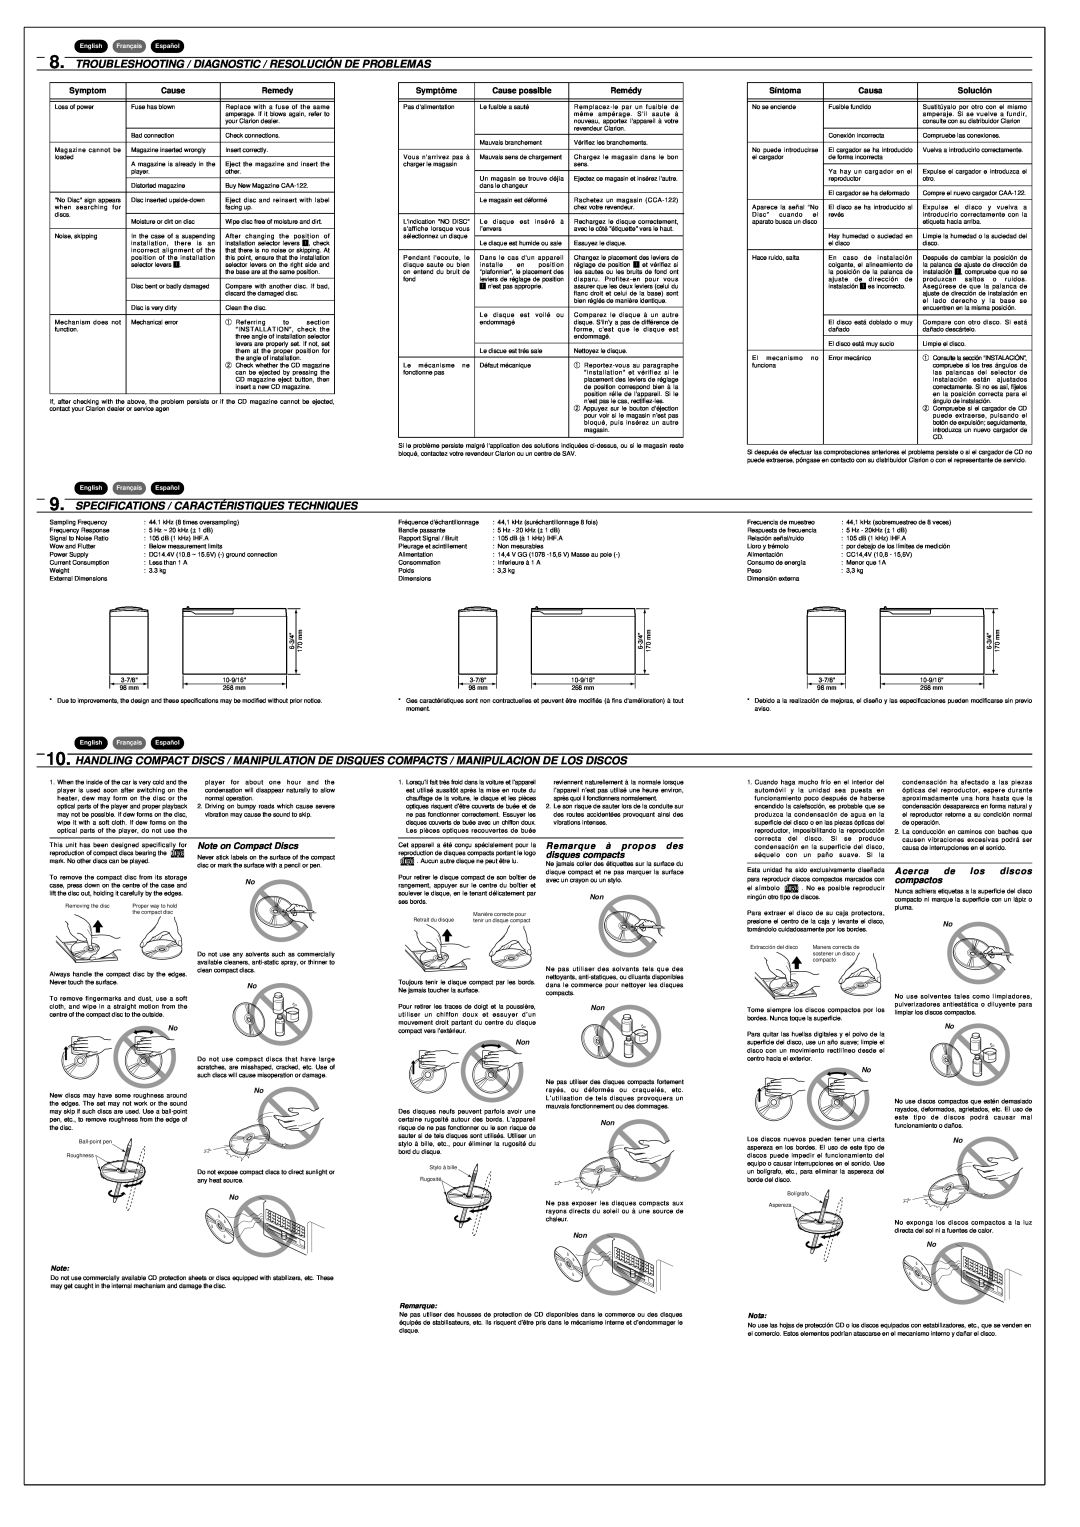 Clarion CDC1235 Specifications / Caracté Ristiques Techniques, Note on Compact Discs, Acerca de los discos compactos, Nota 